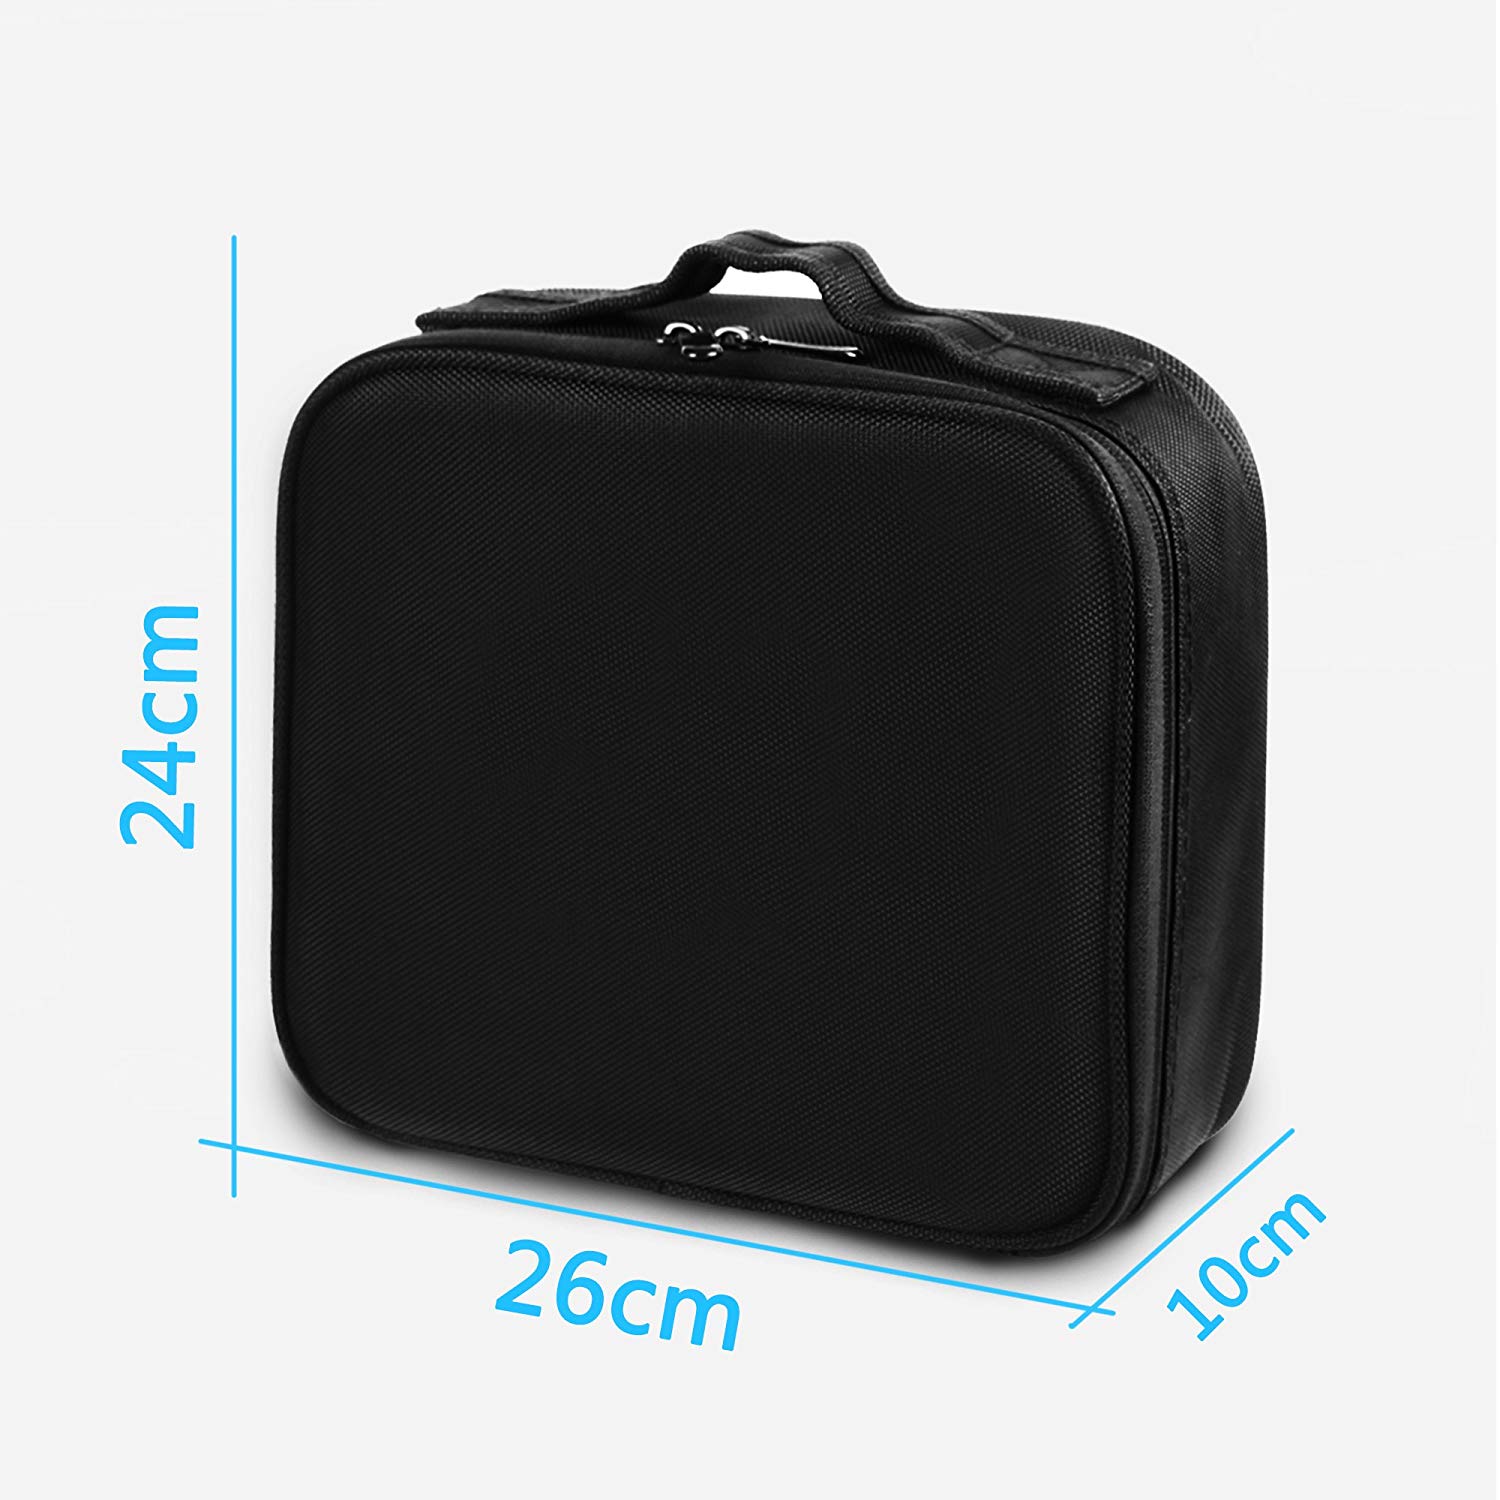 Travel Makeup Case Portable Medium Makeup Organizer Case Makeup Train Case with Adjustable Dividers and Shoulder Strap